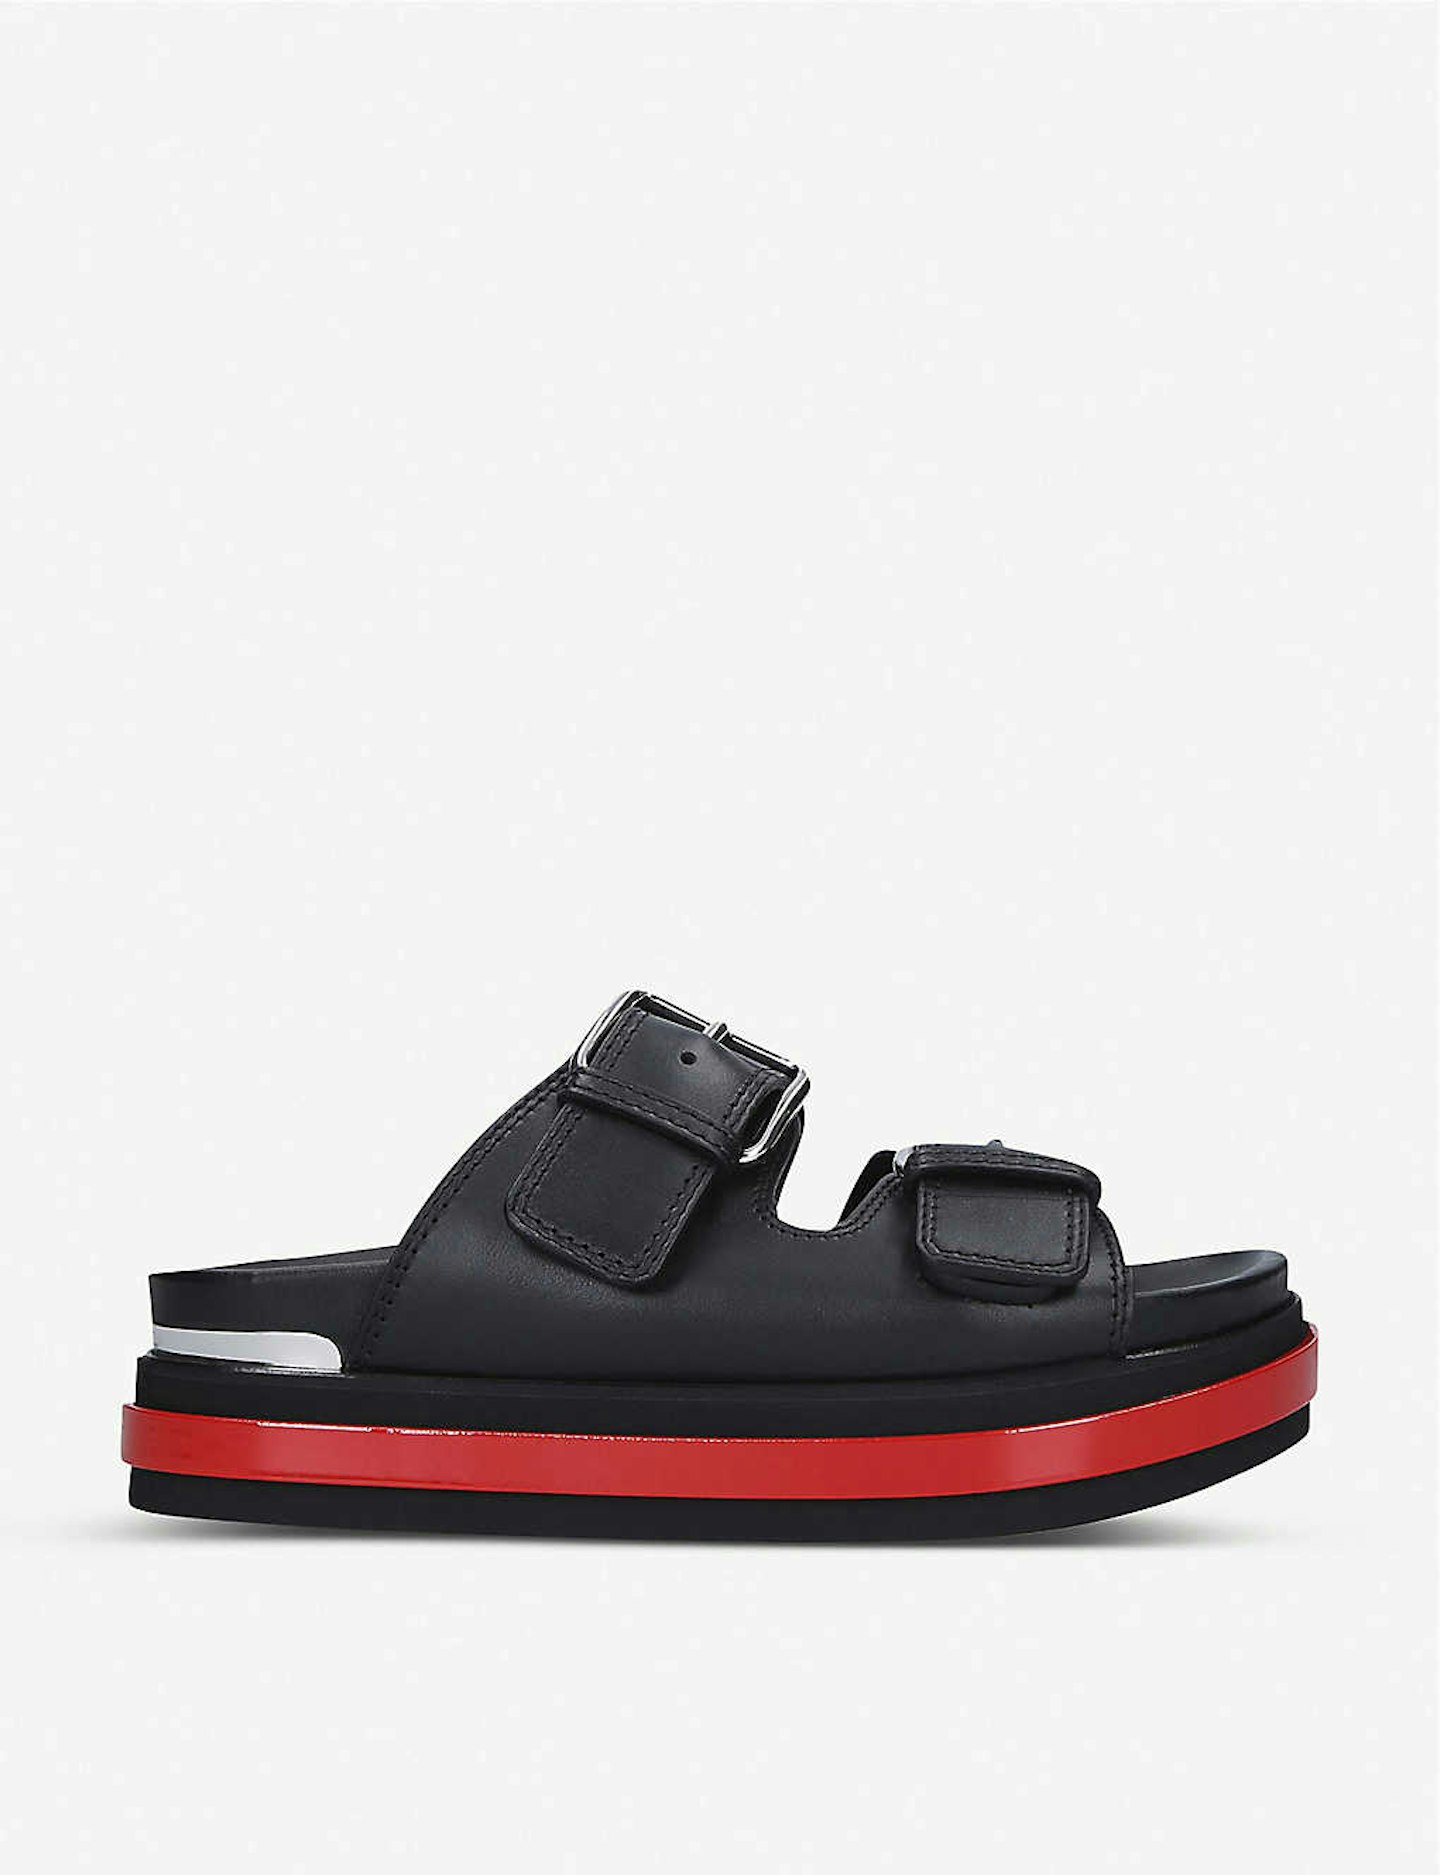 Alexander McQueen, Trompe L'Oeil Leather Sandals, £540